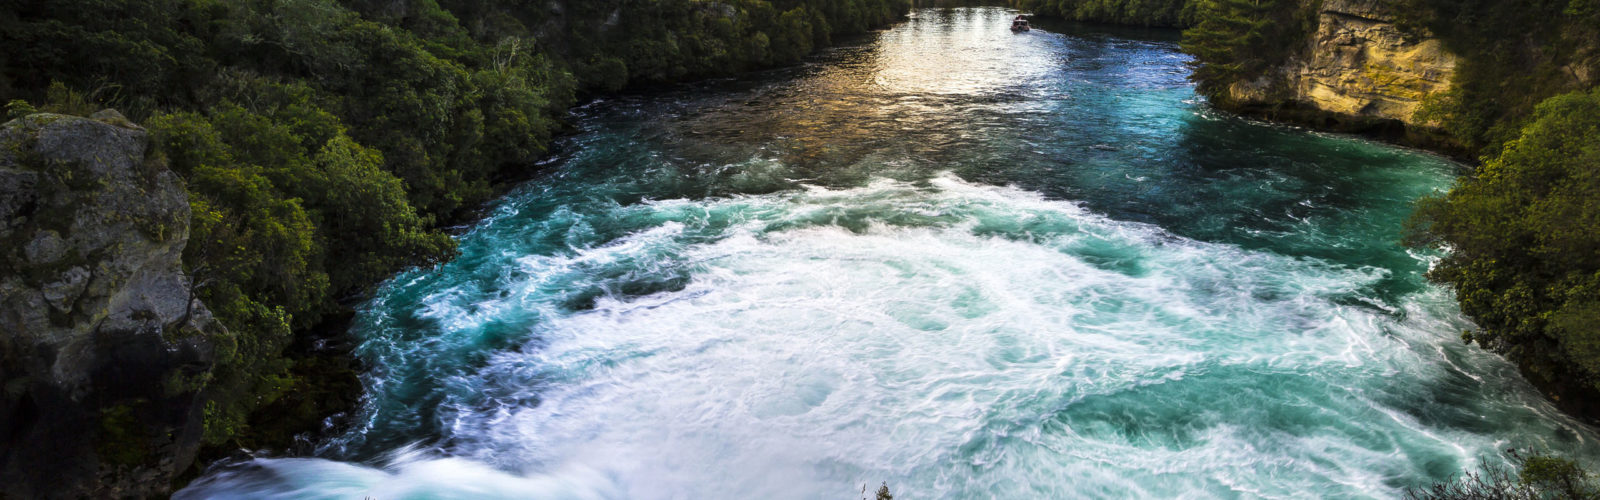 Huka Falls, Taupo / New Zealand